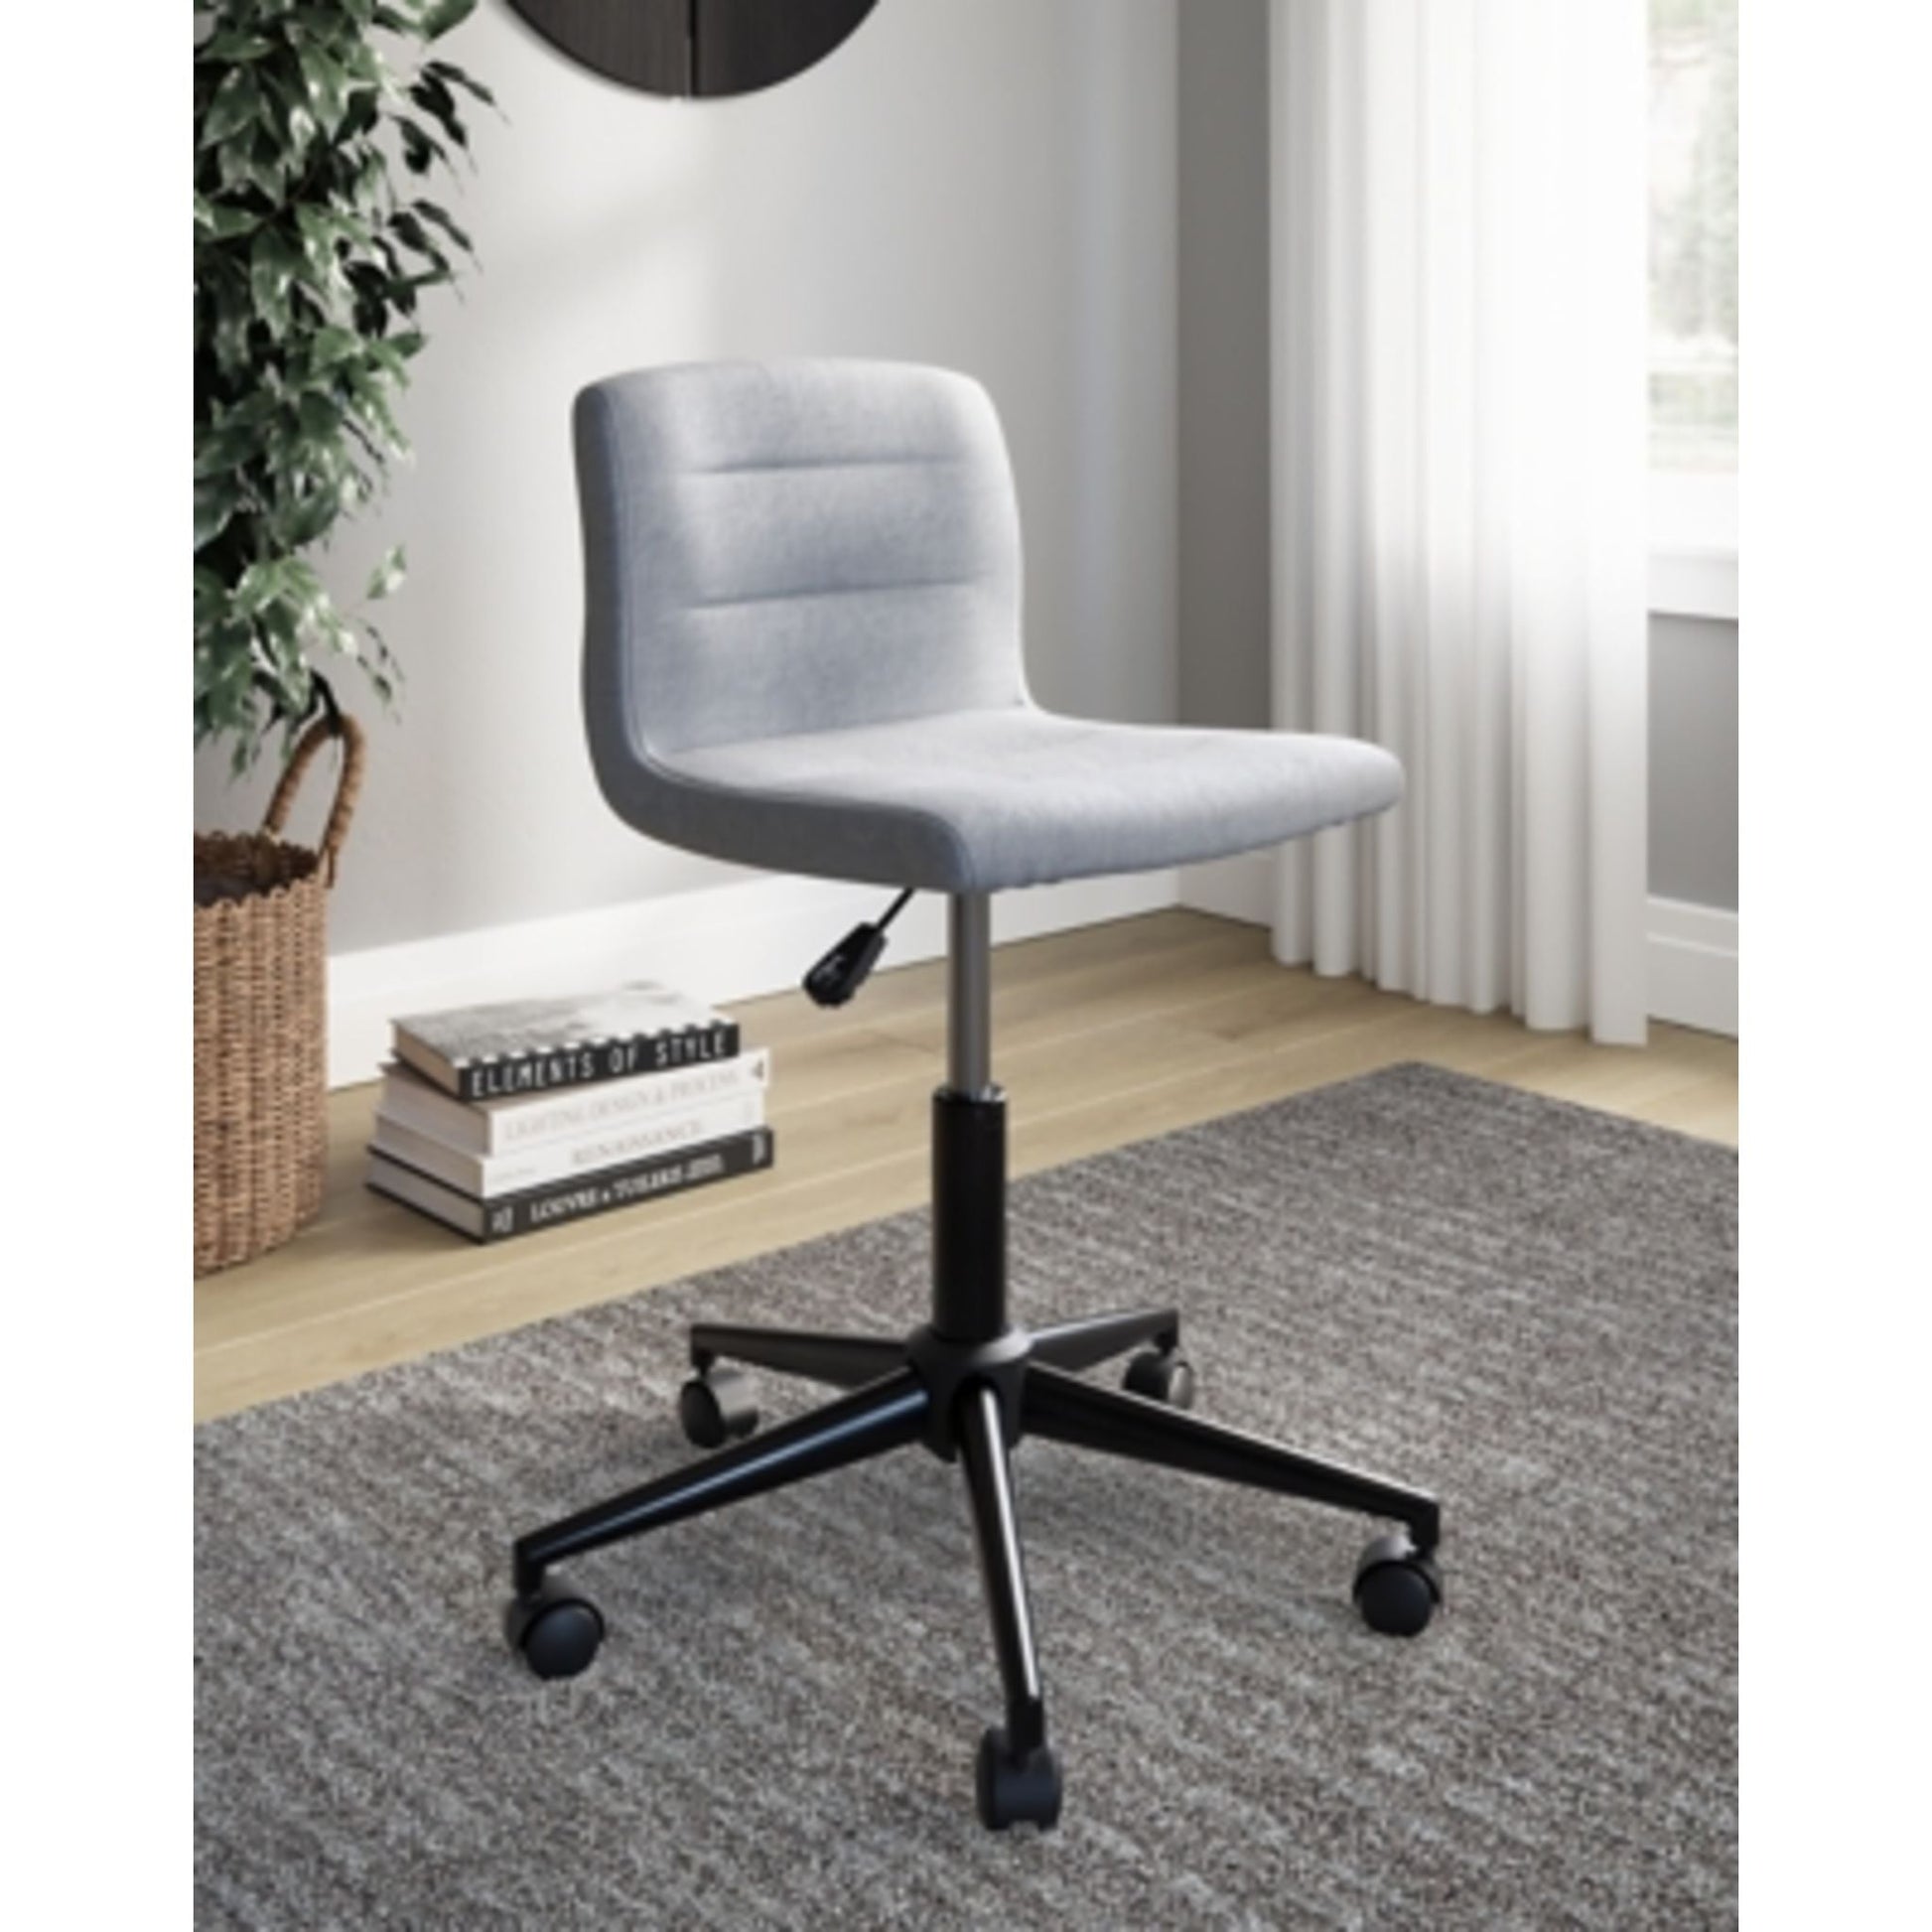 Beauenali Office Chair - Gray